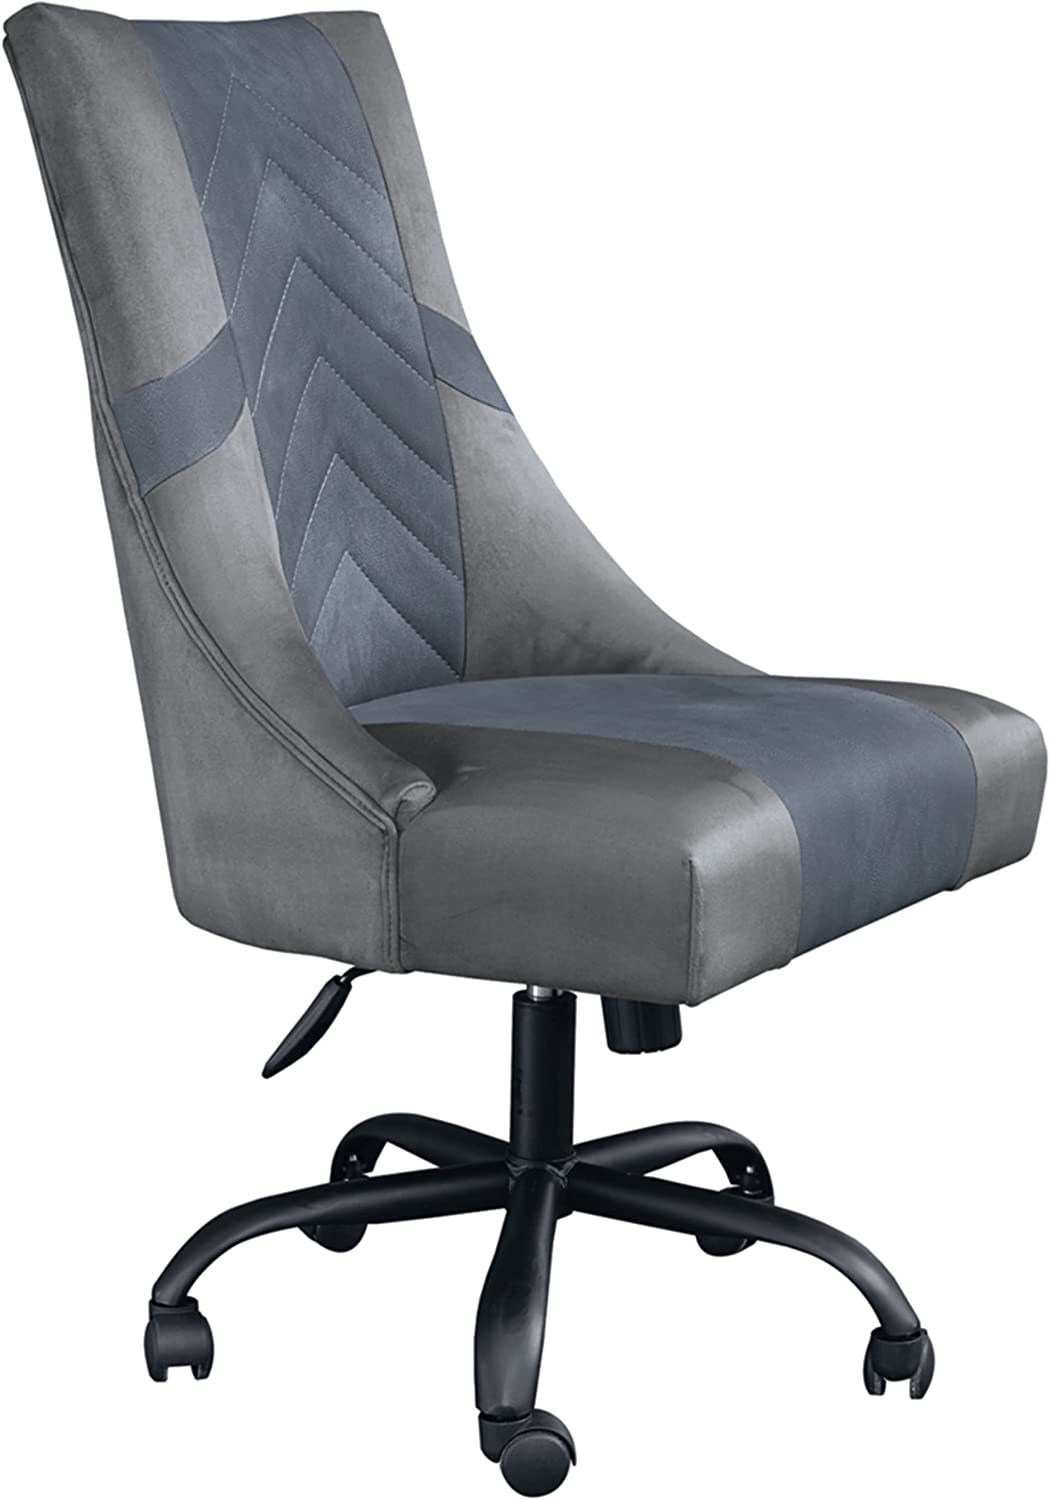 Signature Design by Ashley Barolli Swivel Gaming Chair, Dining, Blue & Dark Gray - $430.99